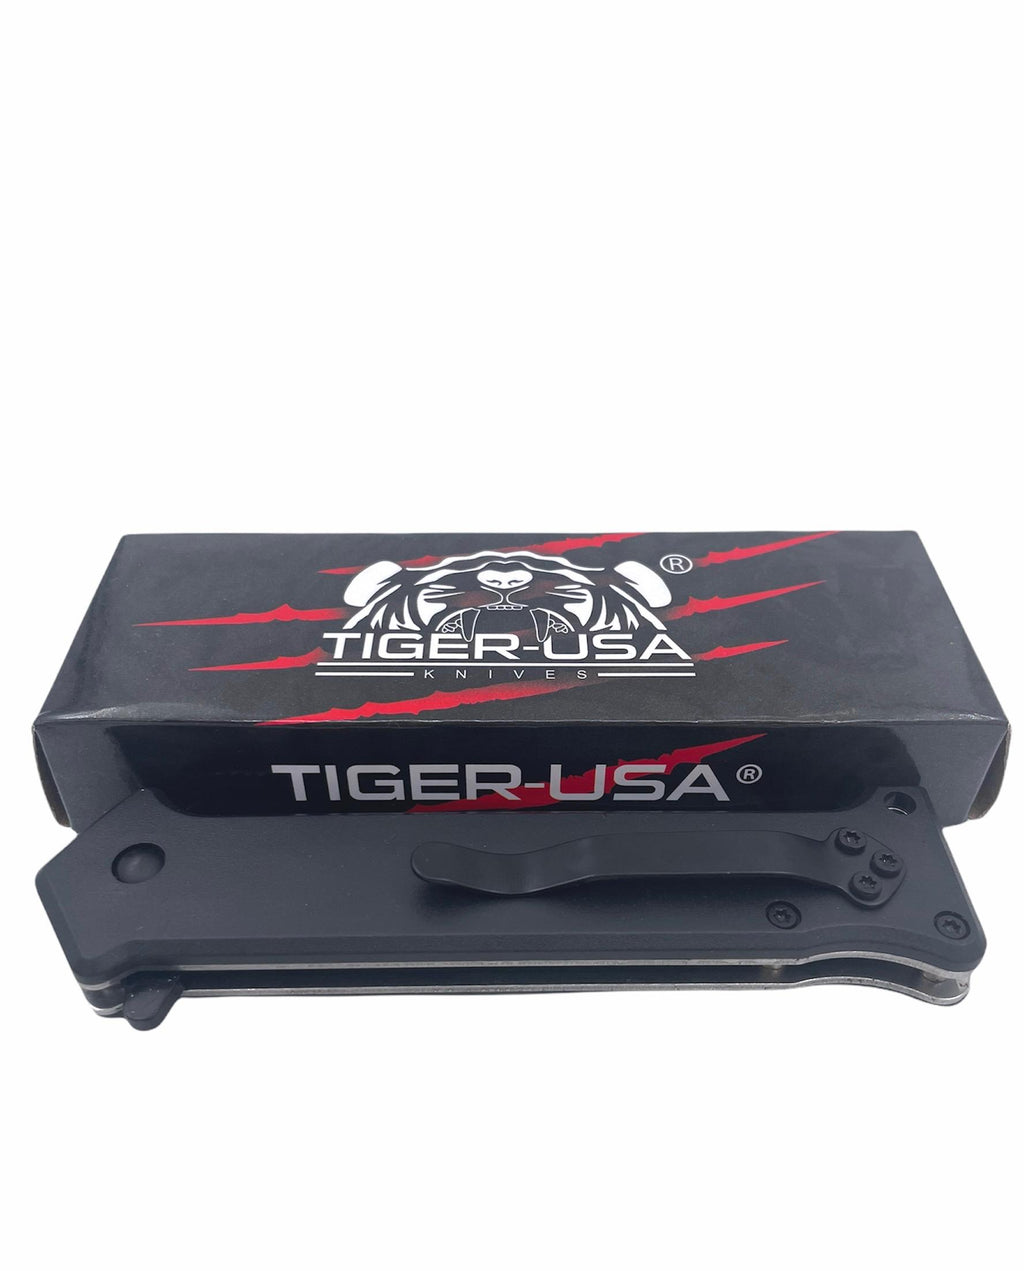 Tiger-USA Spring Assisted Knife - BOAR